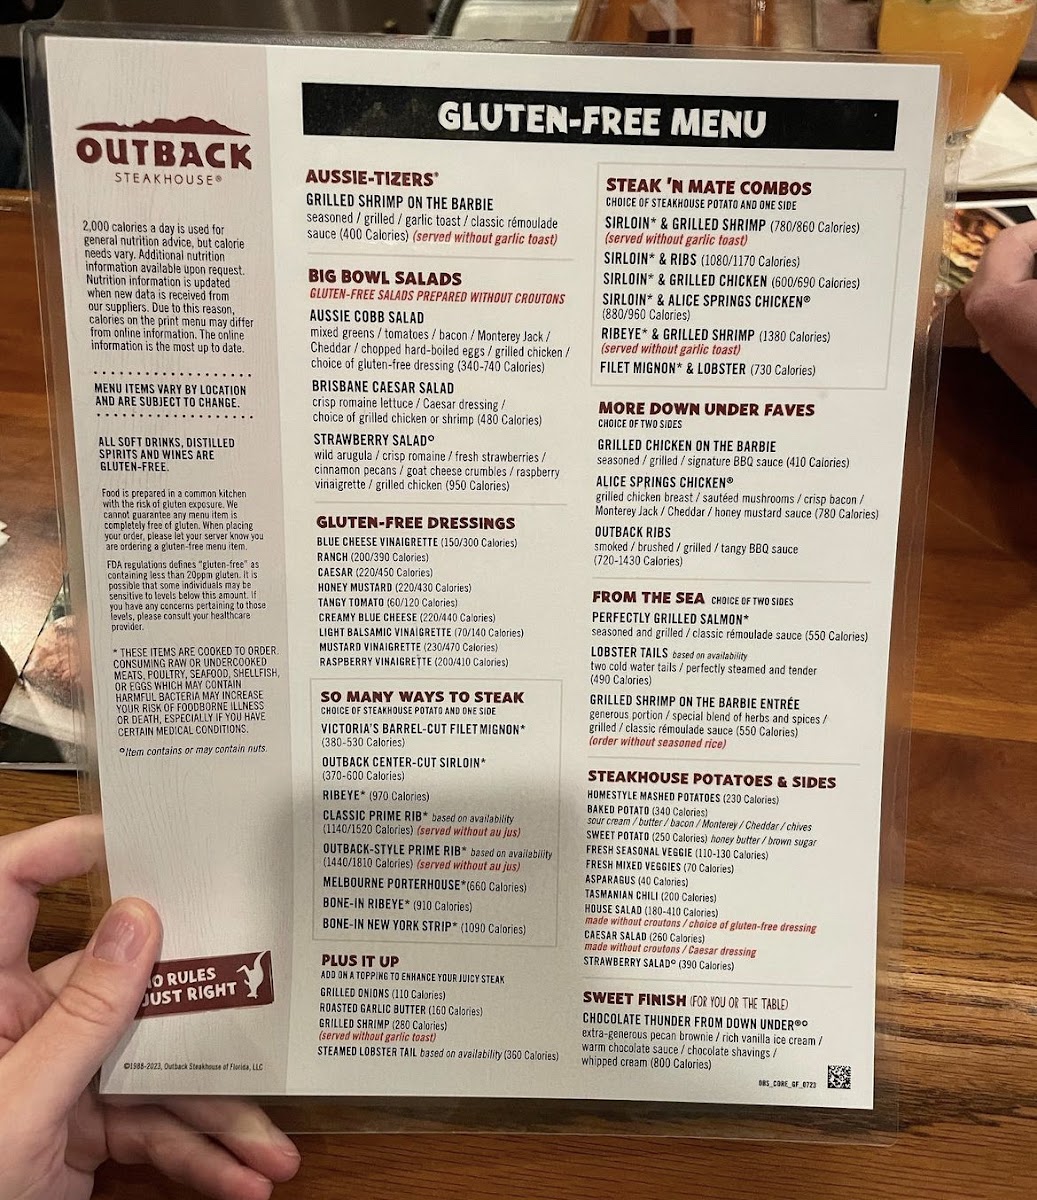 Outback Steakhouse gluten-free menu